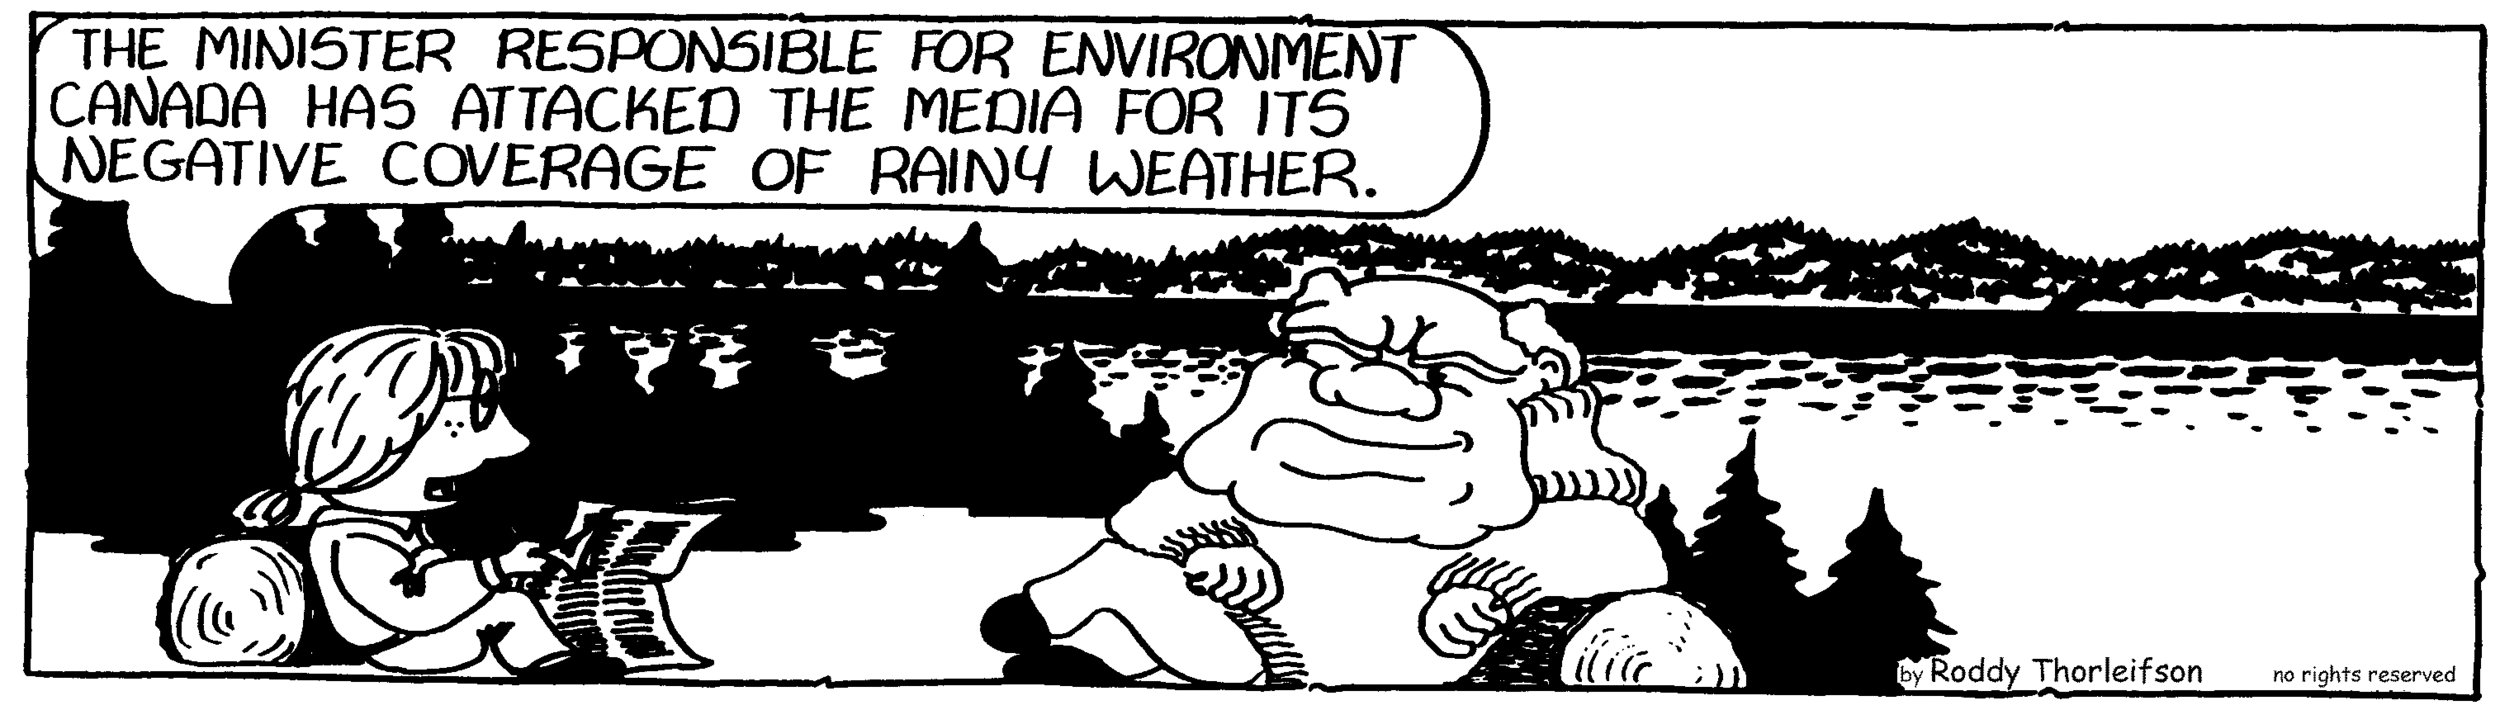 free cartoon Canadian Environment Canada negative coverage